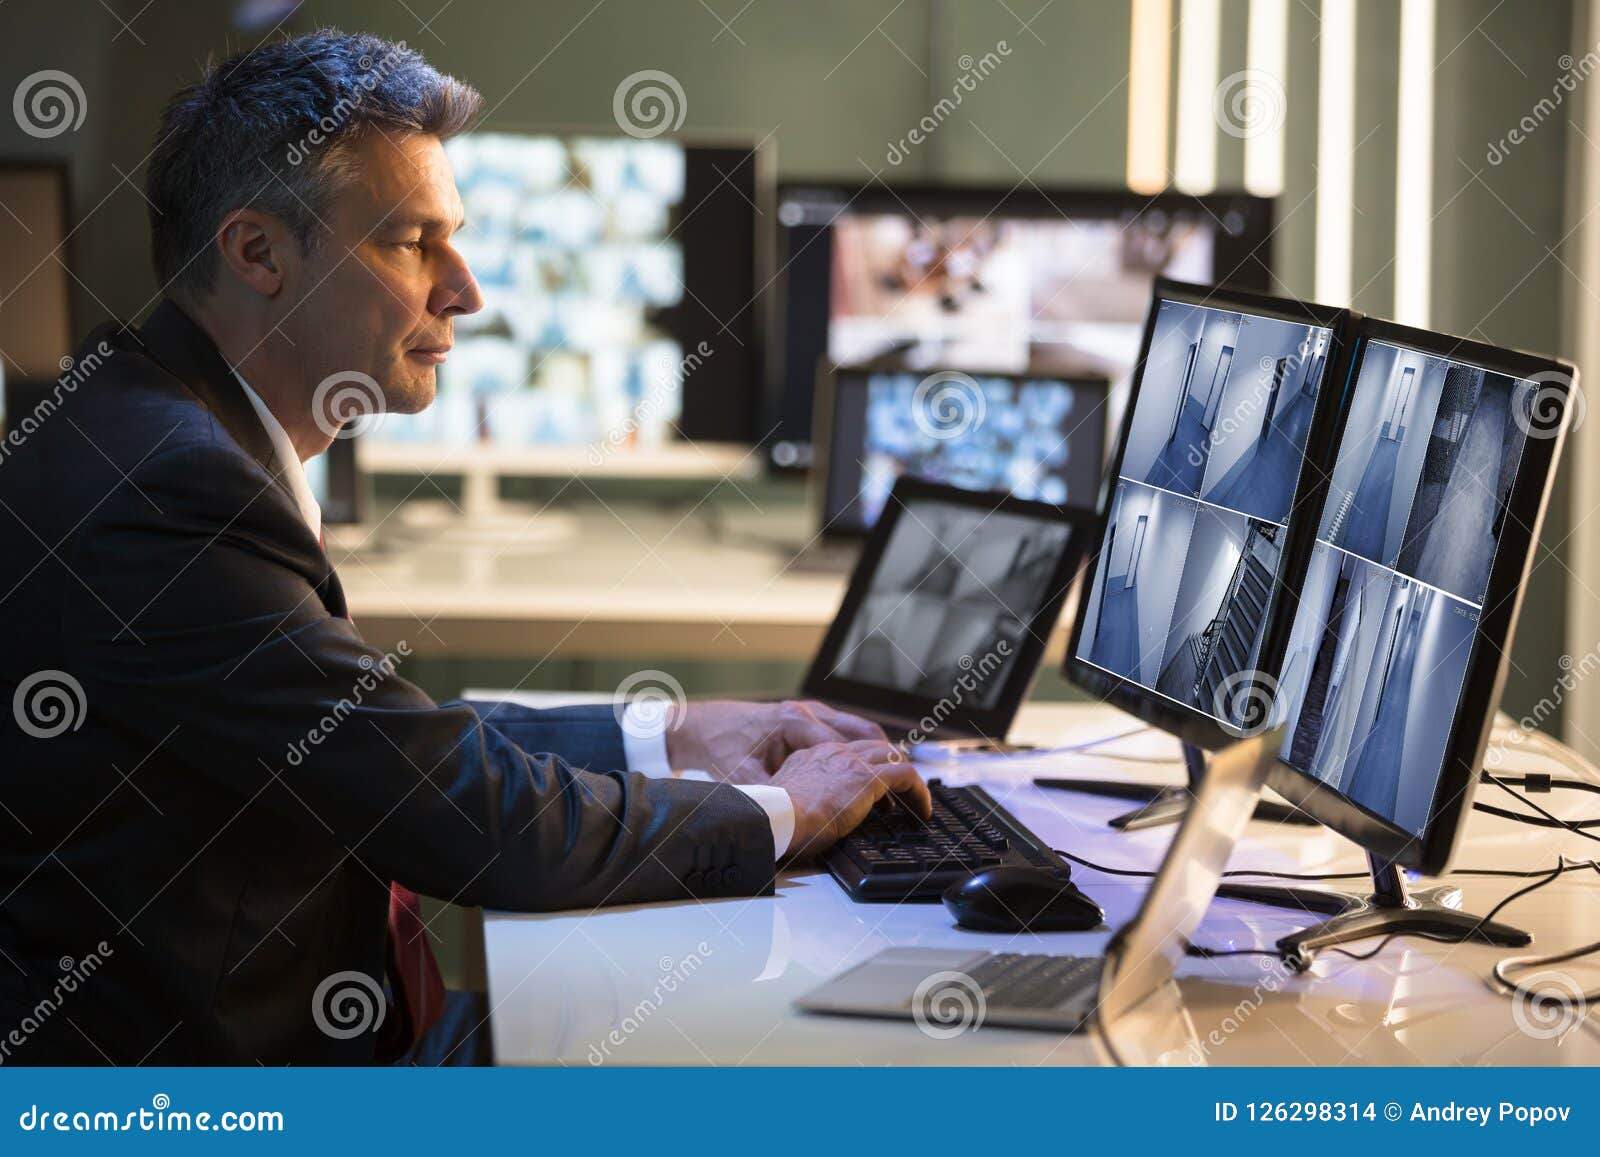 businessman looking at cctv camera footage